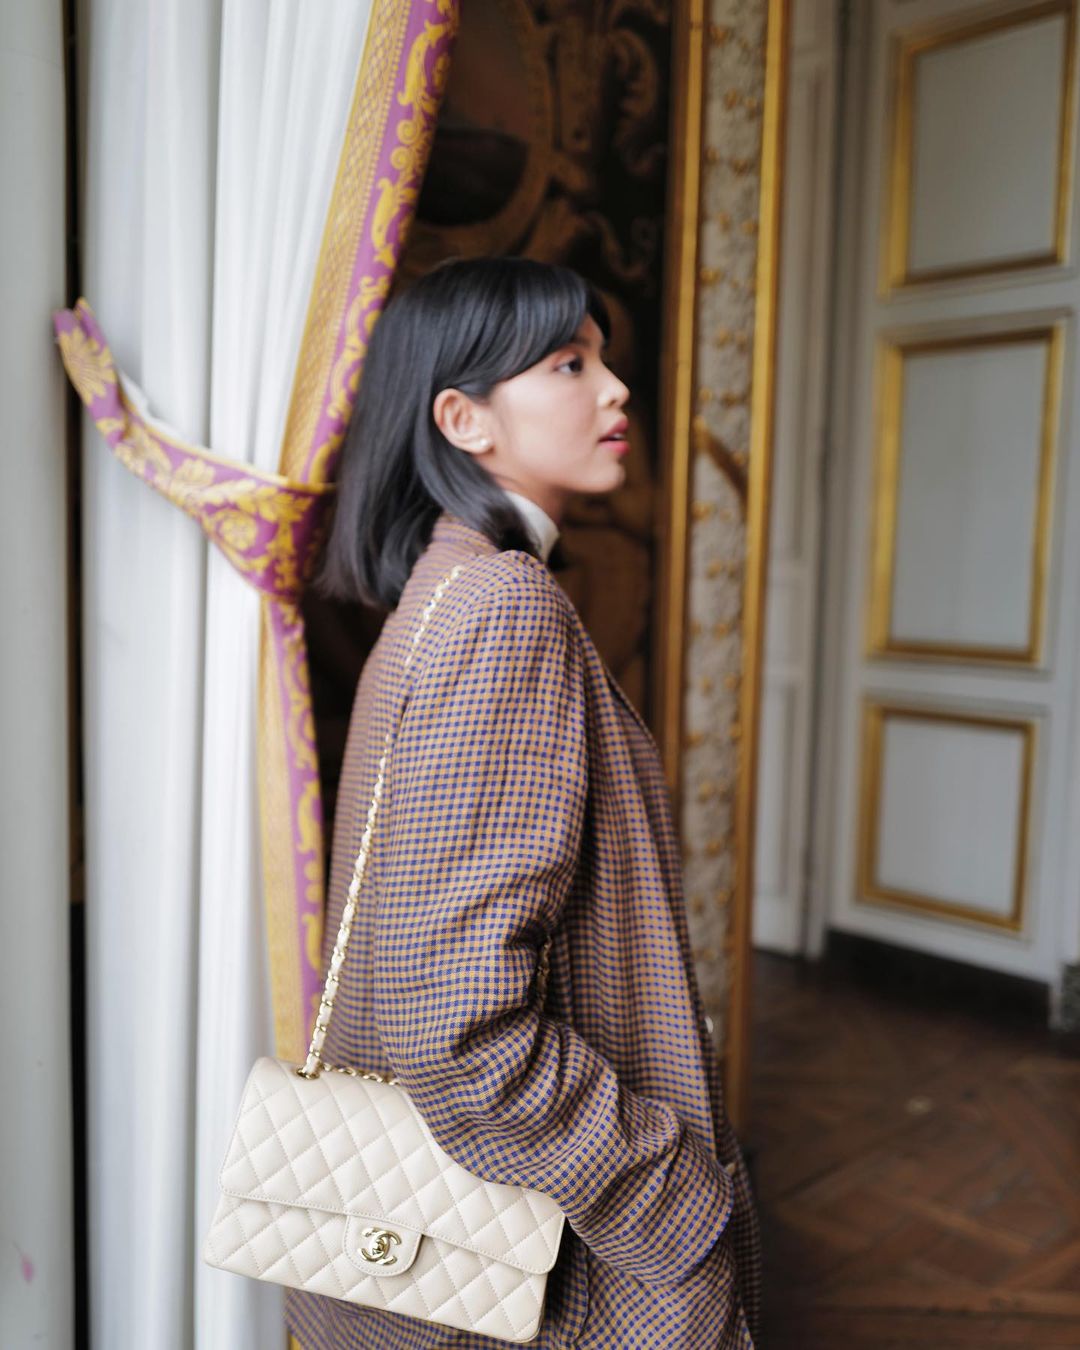 Look: Maine Mendoza's Chanel Bag Collection